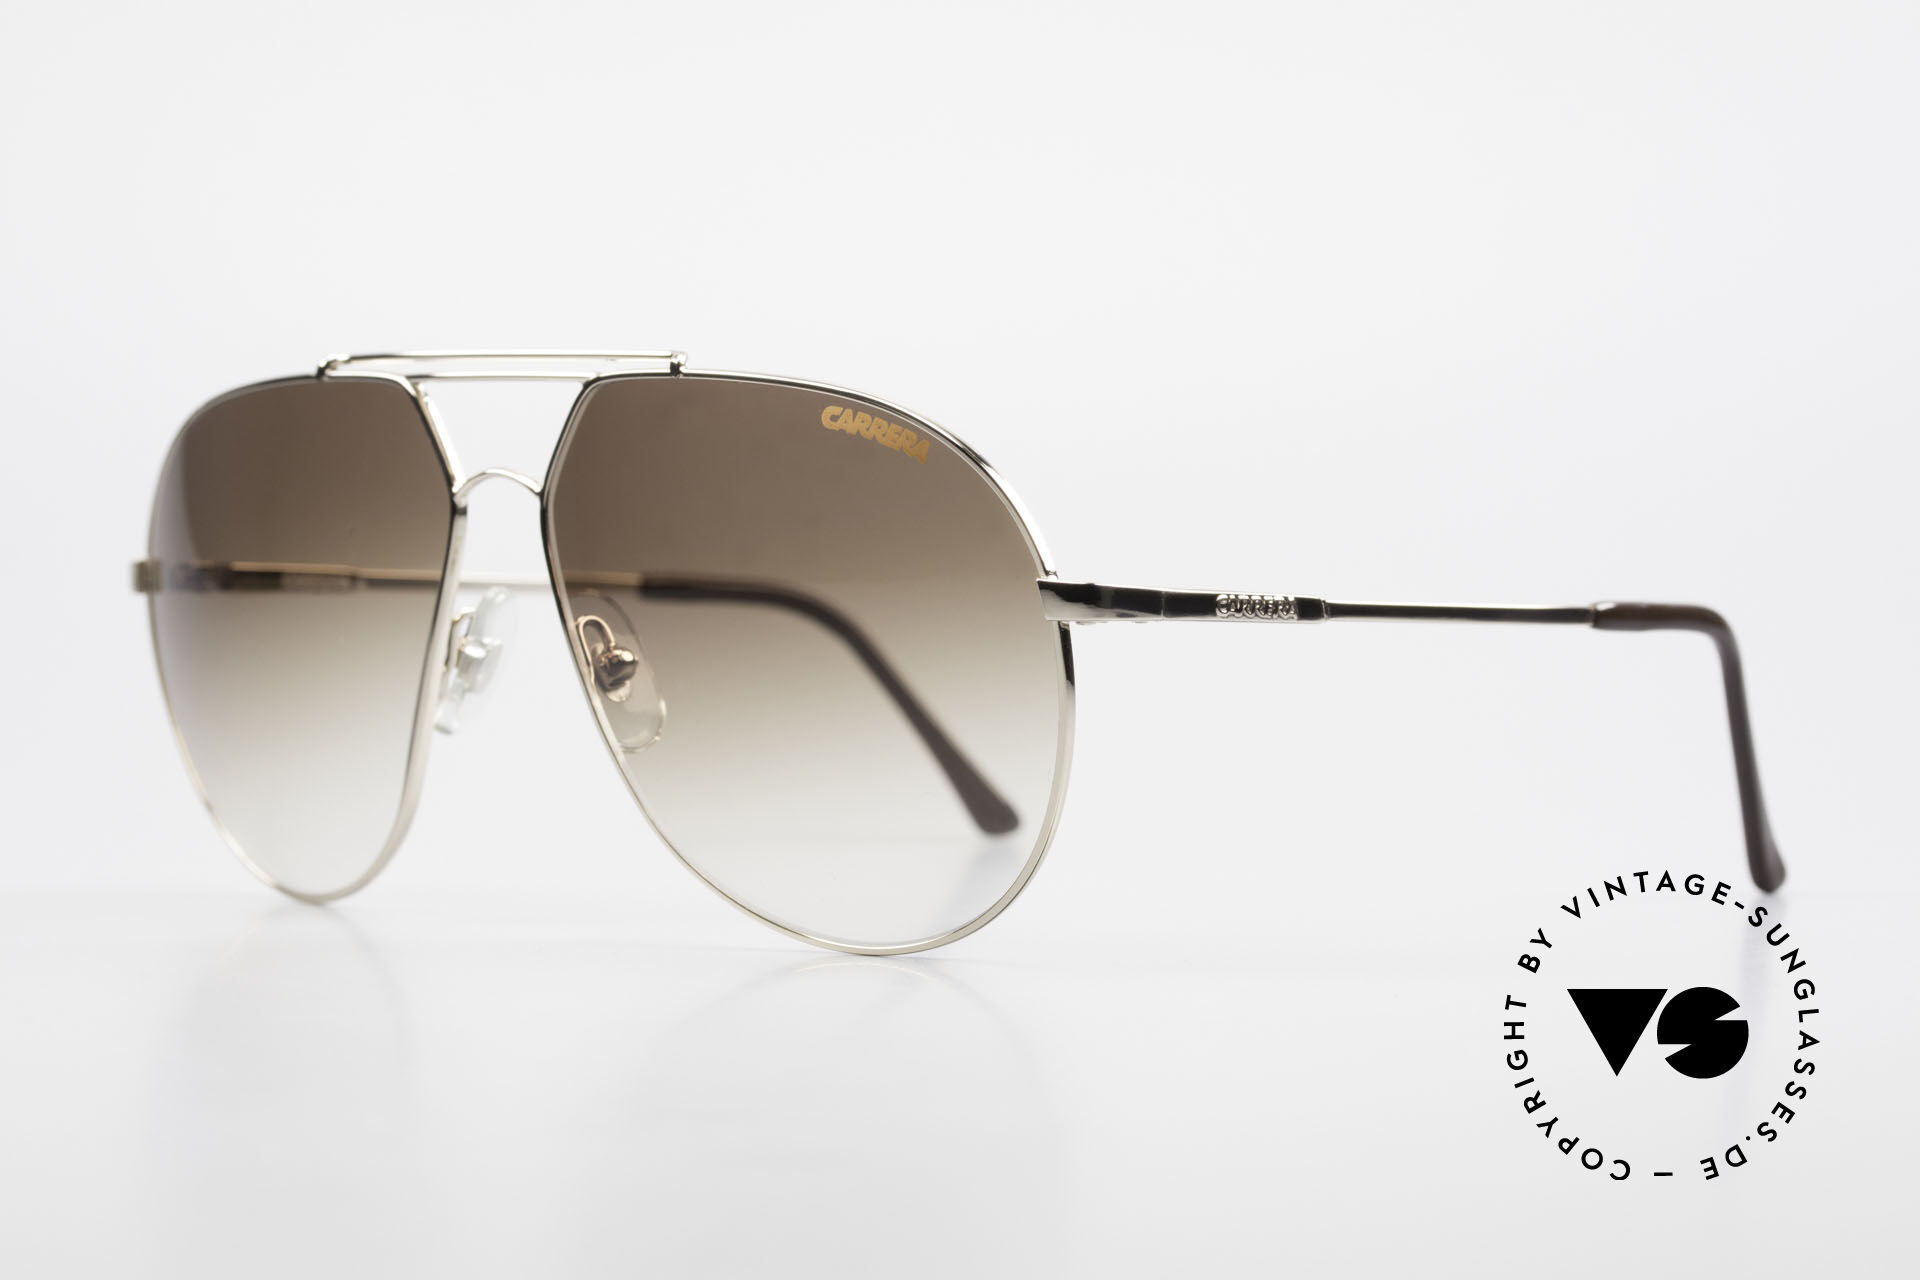 Sunglasses Carrera 5421 90's Aviator Sports Lifestyle